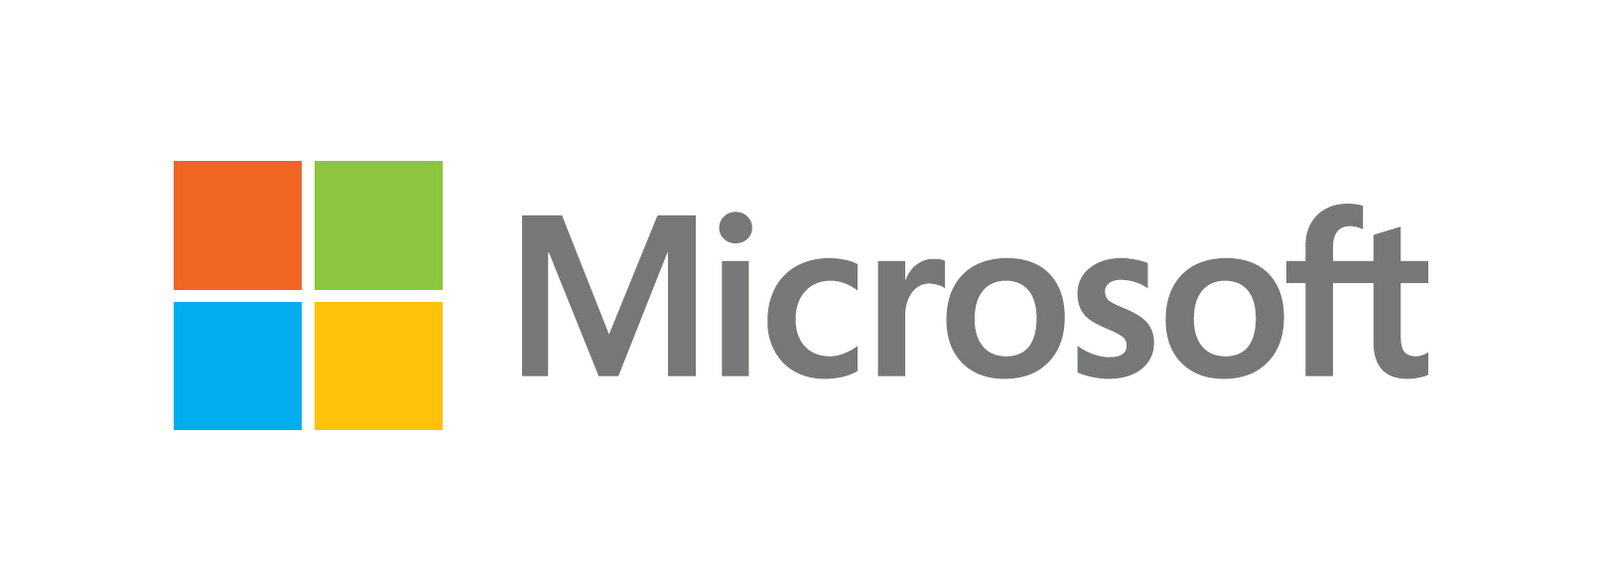 The new Microsoft logo in ult